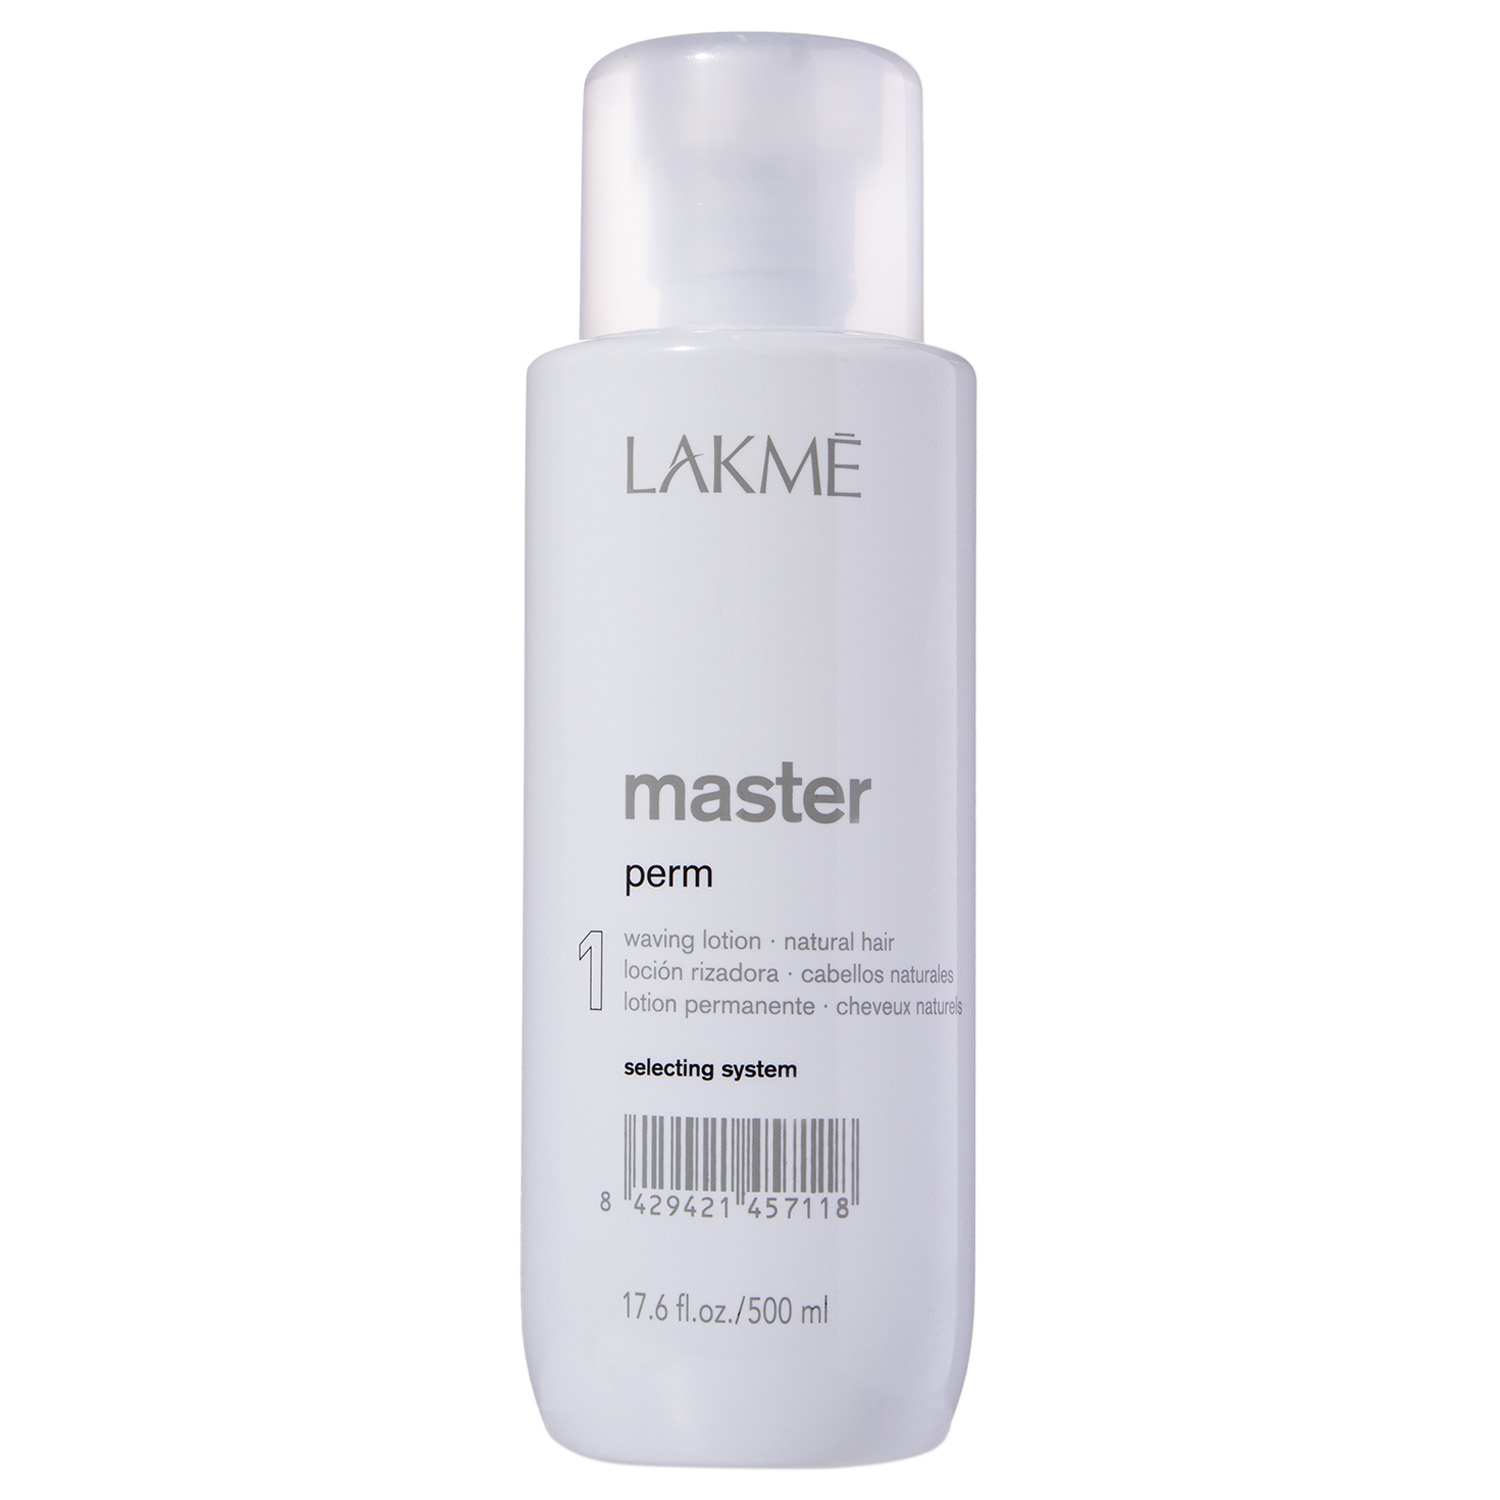 Lakme Лосьон для завивки нормальных волос 1 Perm Waving Lotion 1, 500 мл (Lakme, Master) kapous лосьон для химической завивки волос 0 500мл